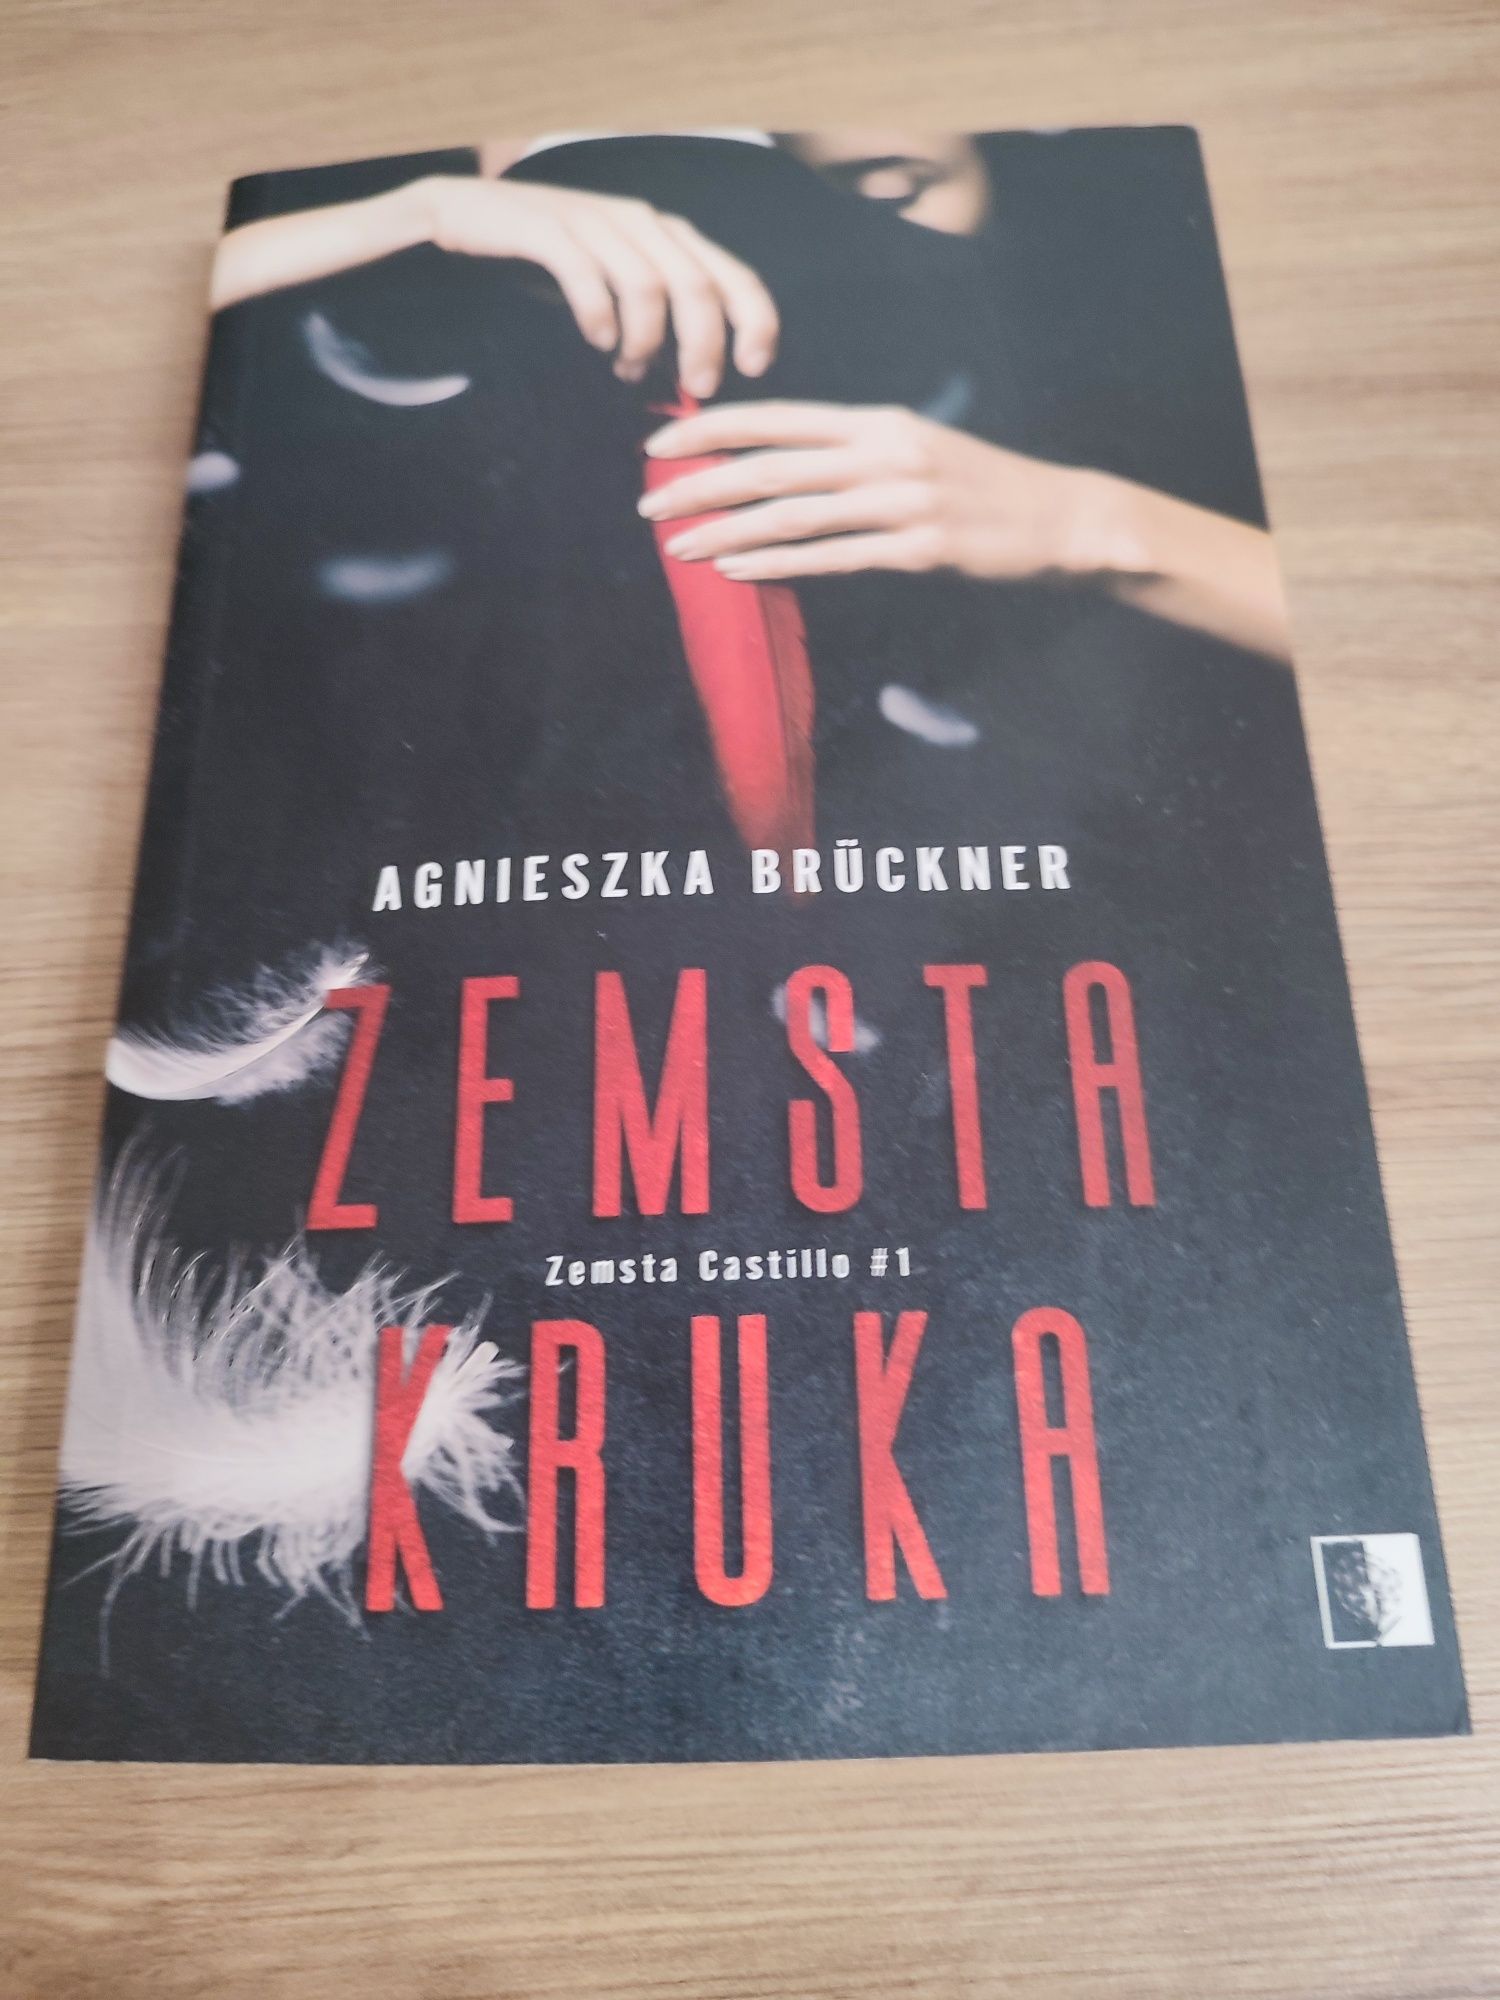 Agnieszka Brückner - "zemsta kruka "-(cz:1)